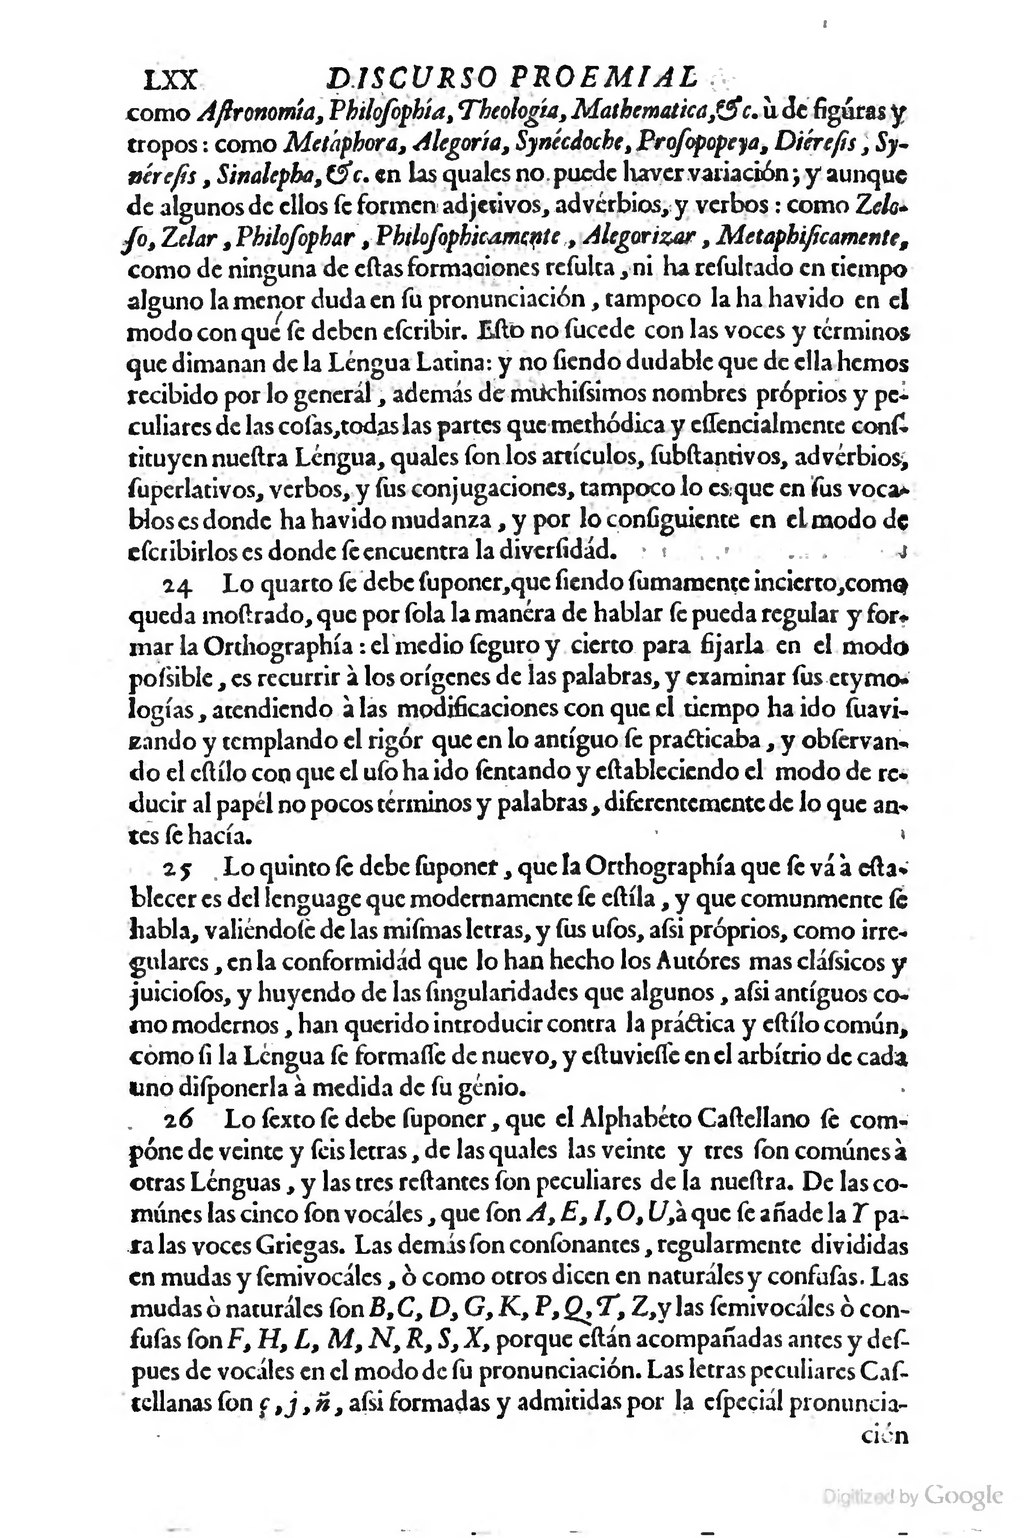 Pagina Diccionario De Autoridades Tomo I Djvu 80 Wikisource